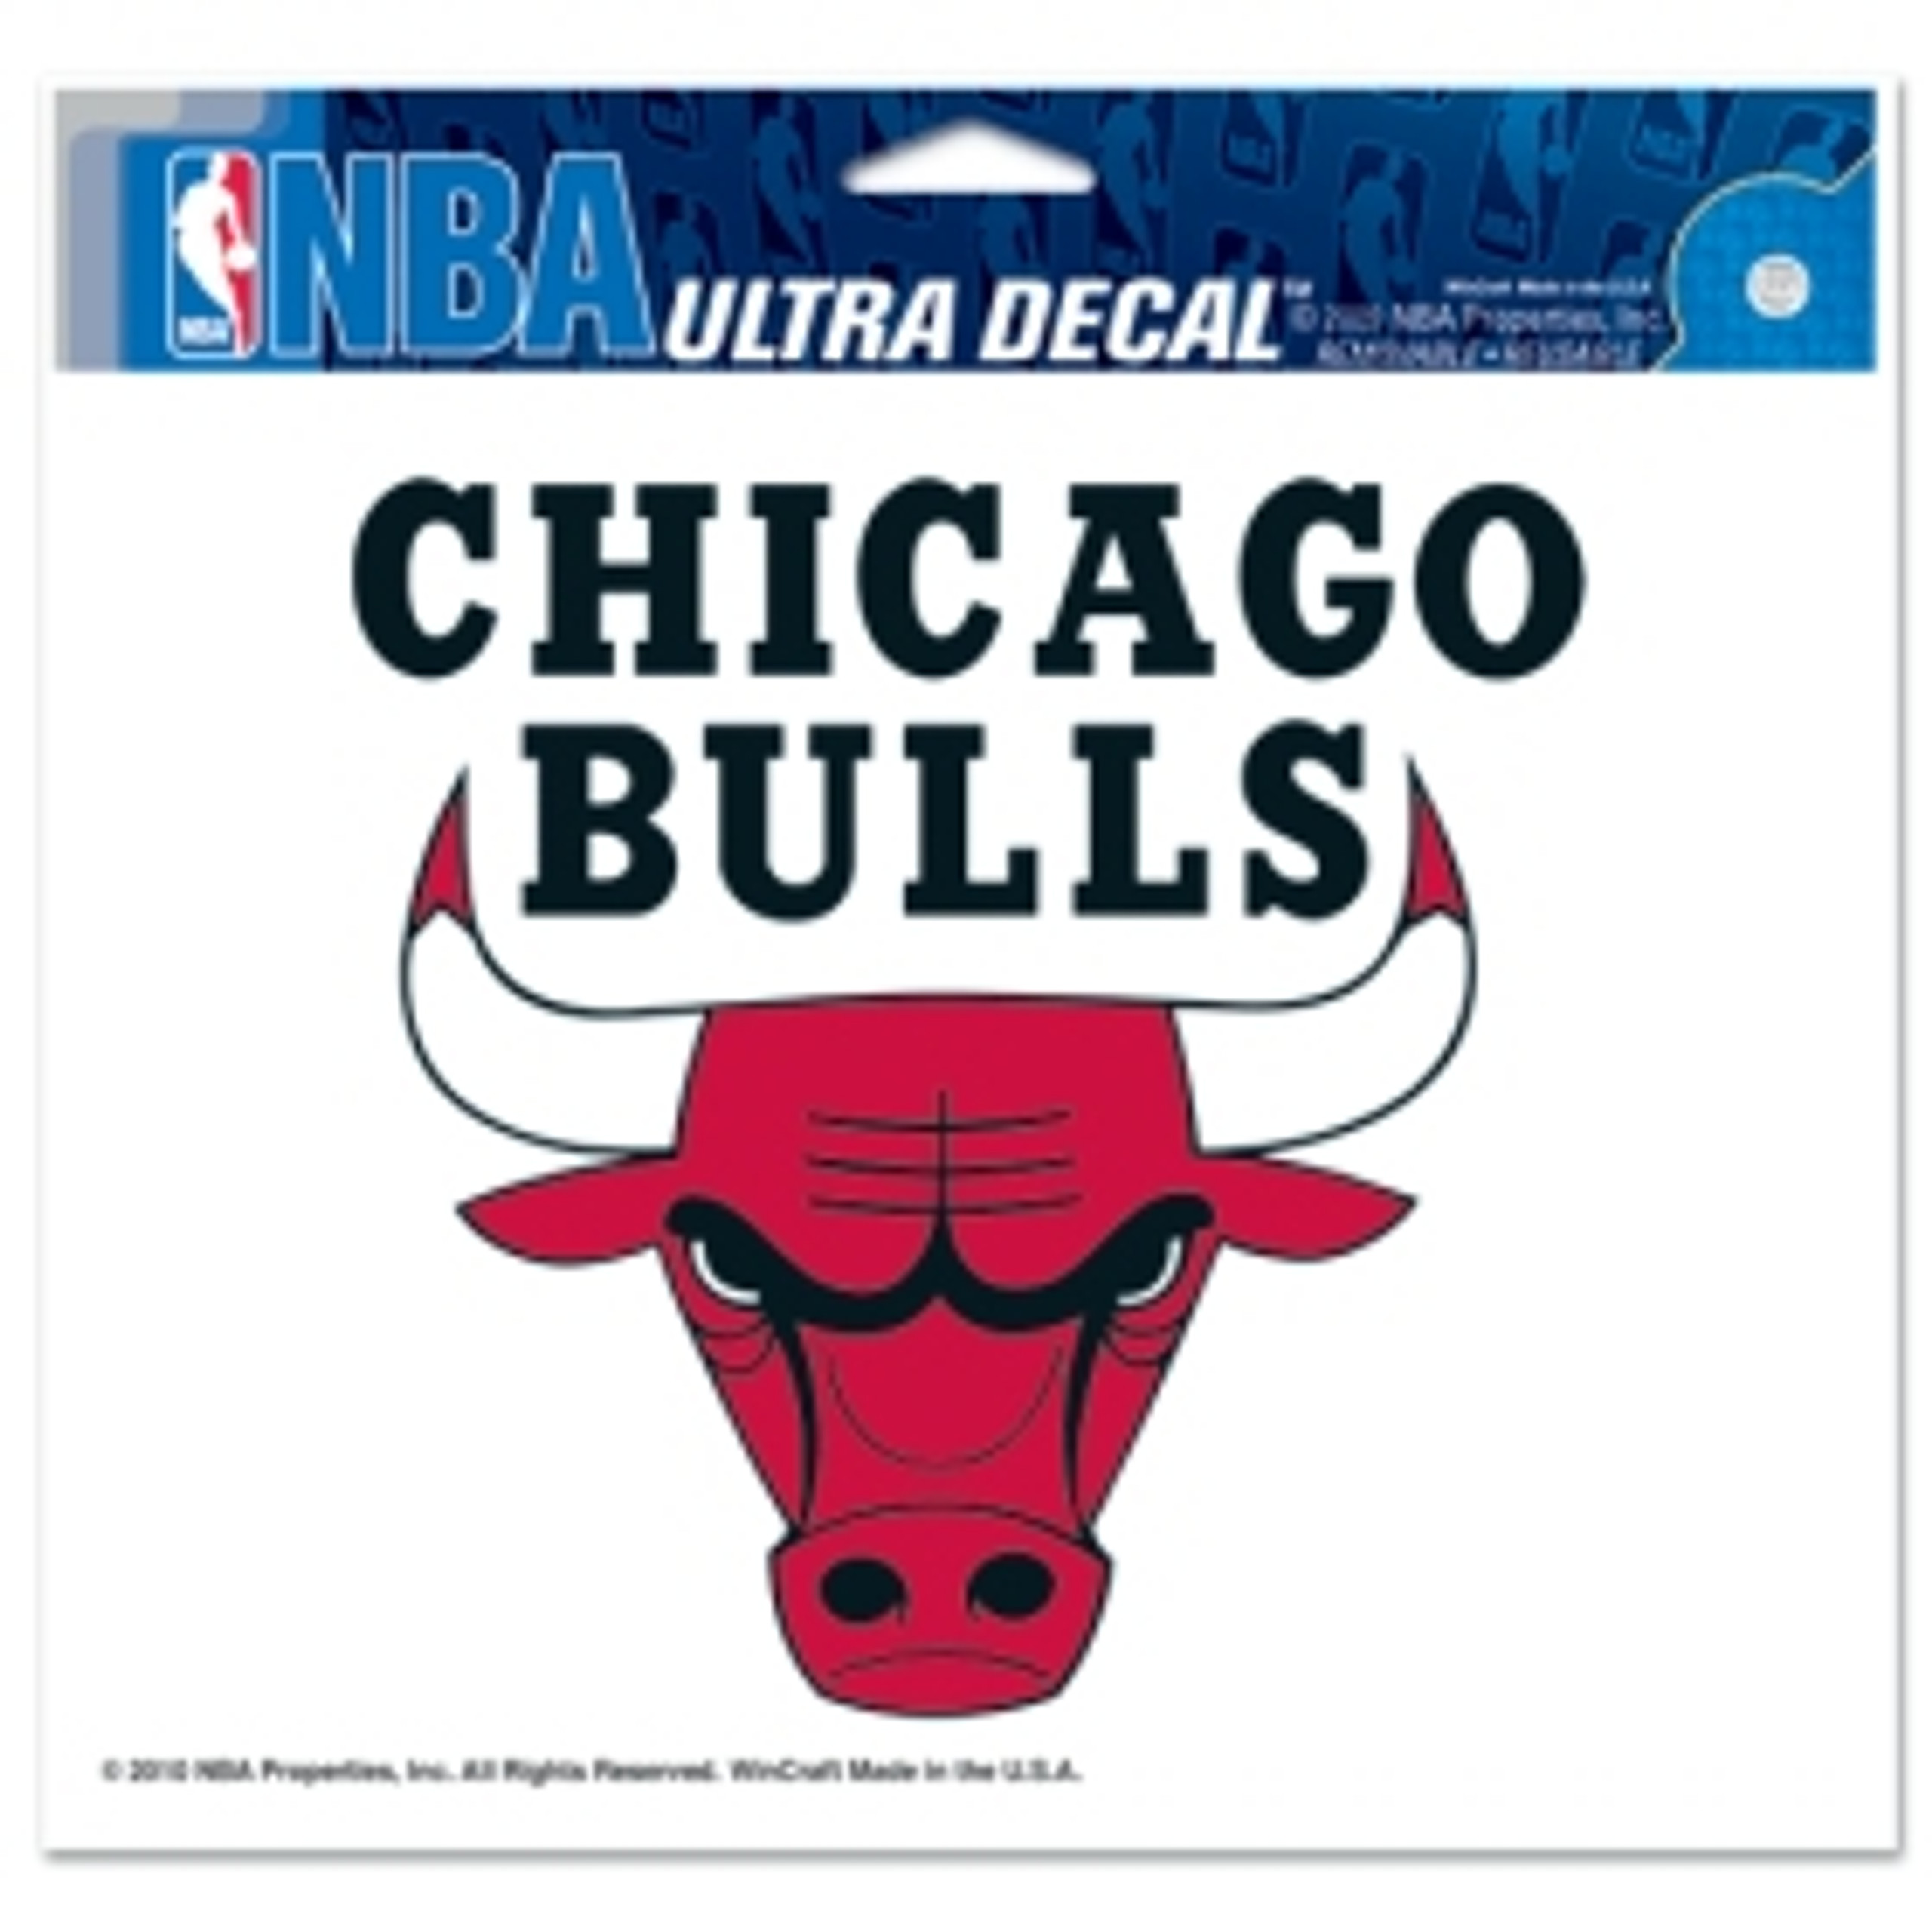 Chicago Bulls Decal 5x6 Ultra - Sports Fan Shop